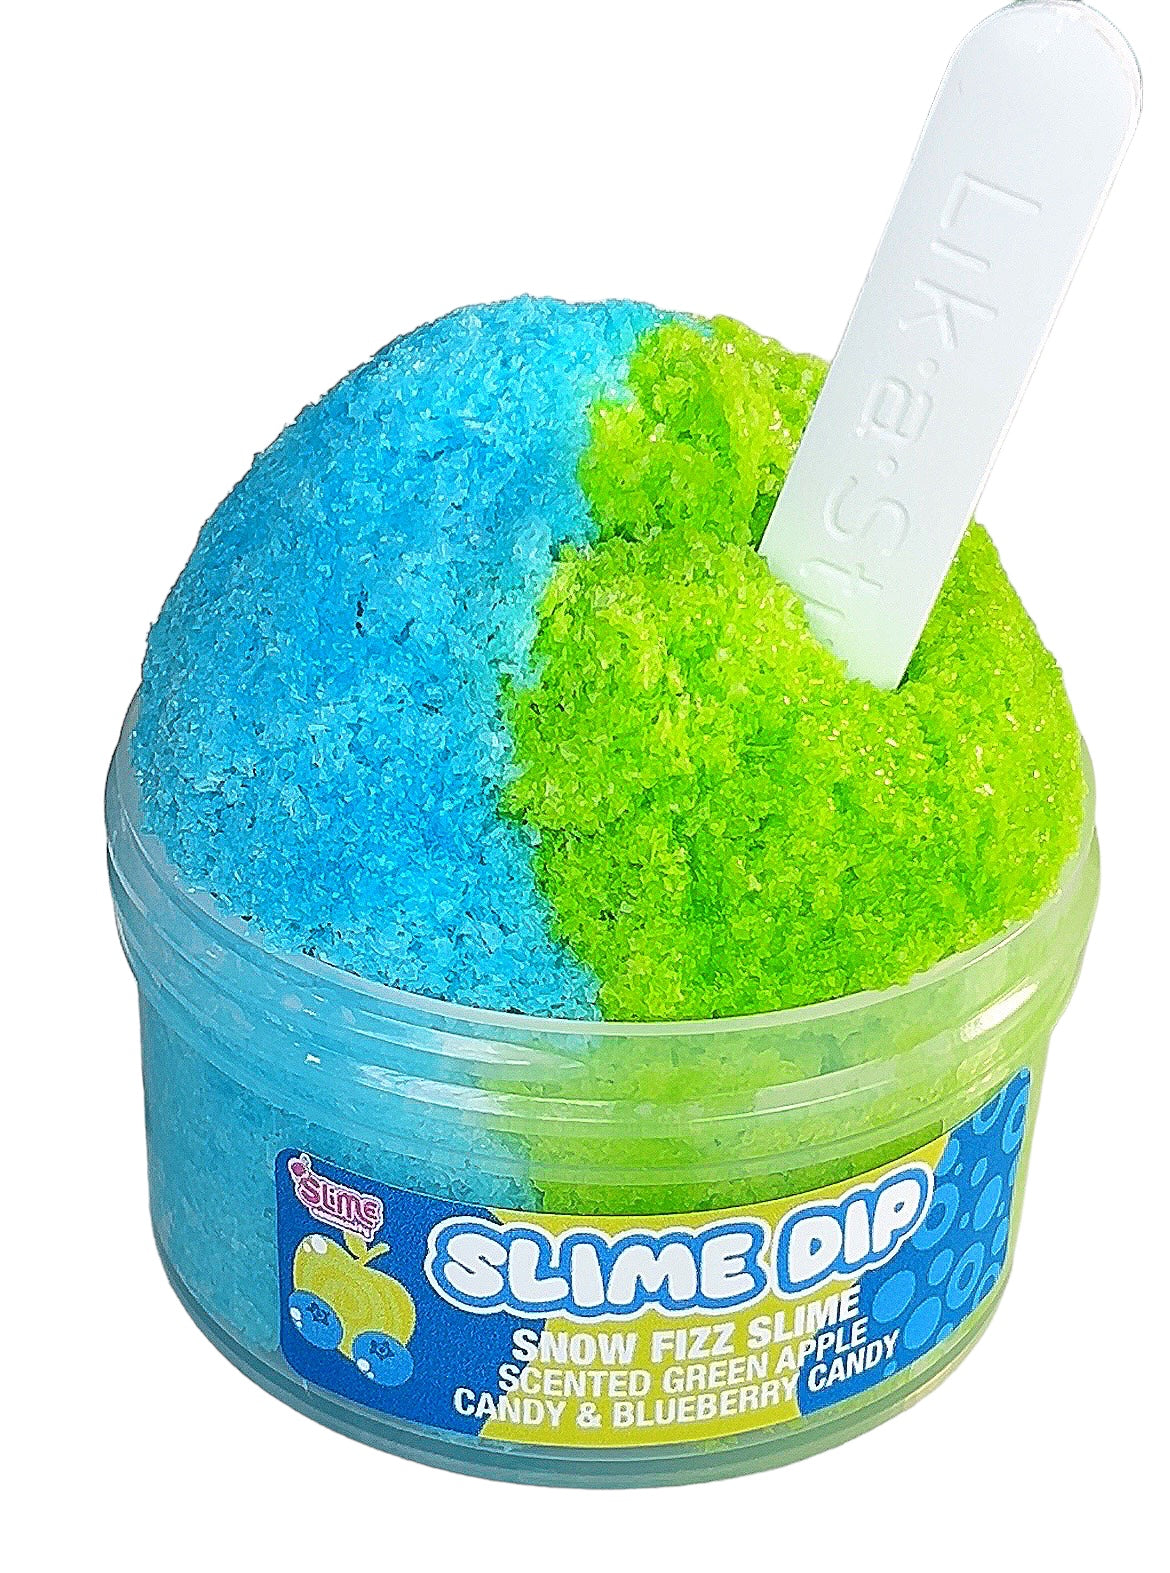 Gum balls scented basic crunchy slime